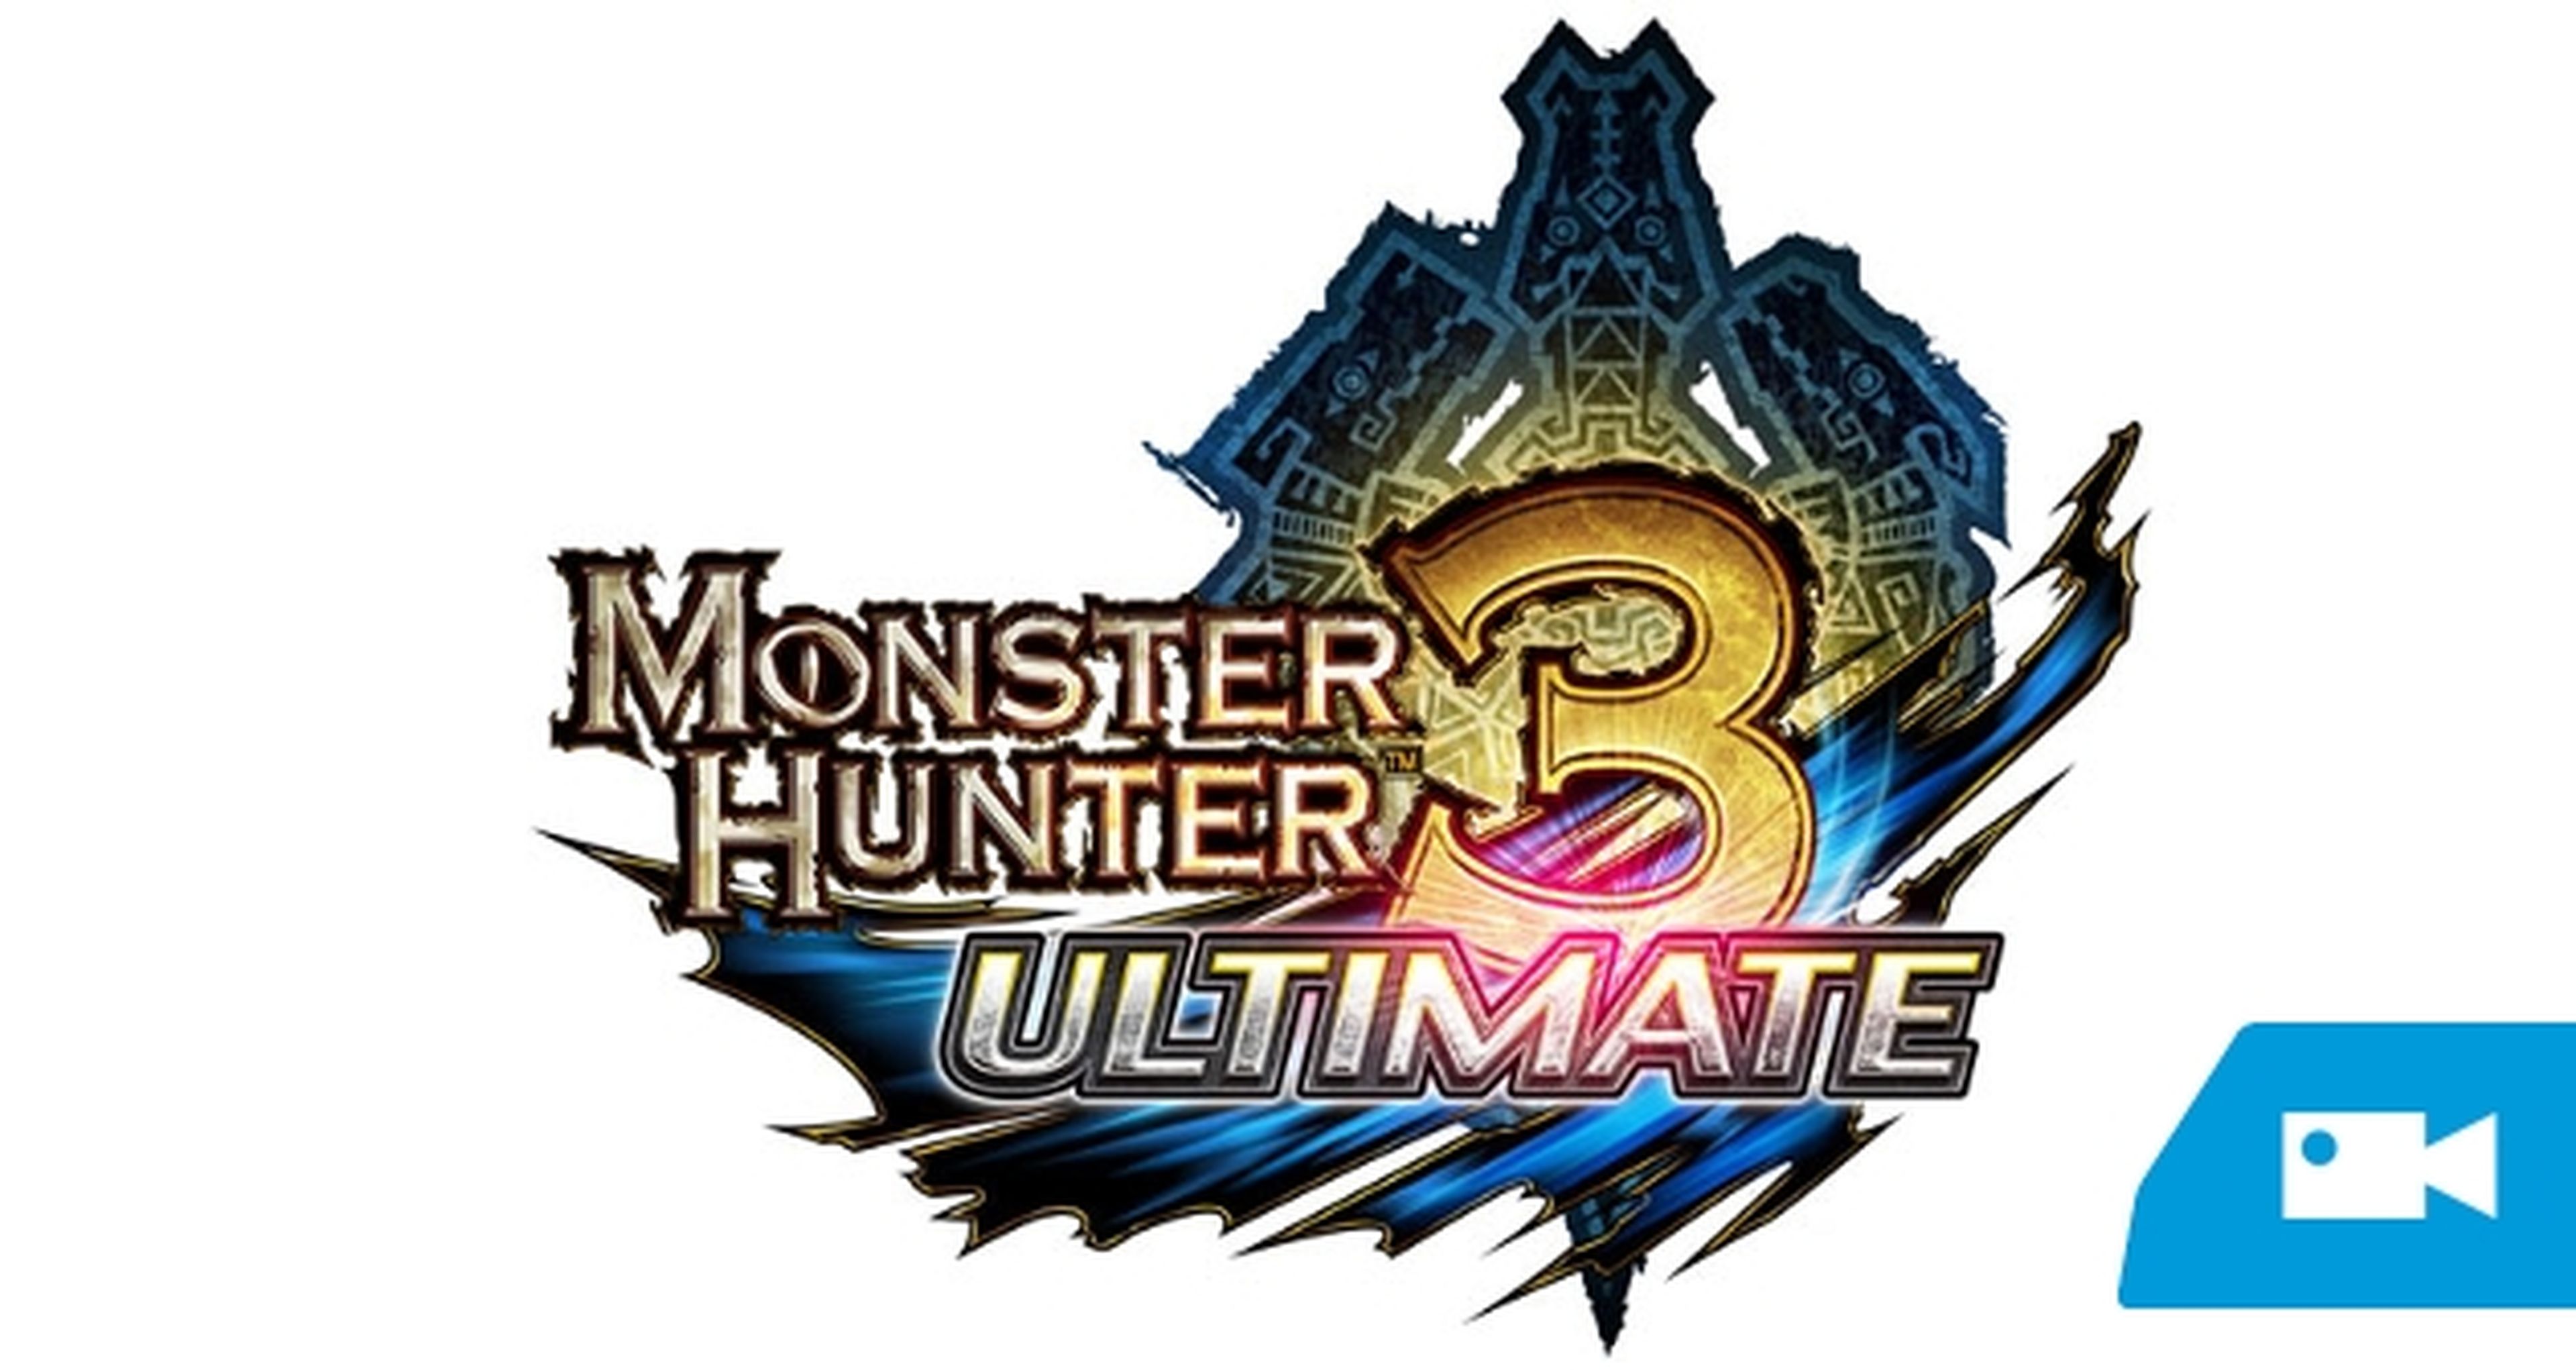 Monster Hunter 3 Ultimate, en Wii U y 3DS